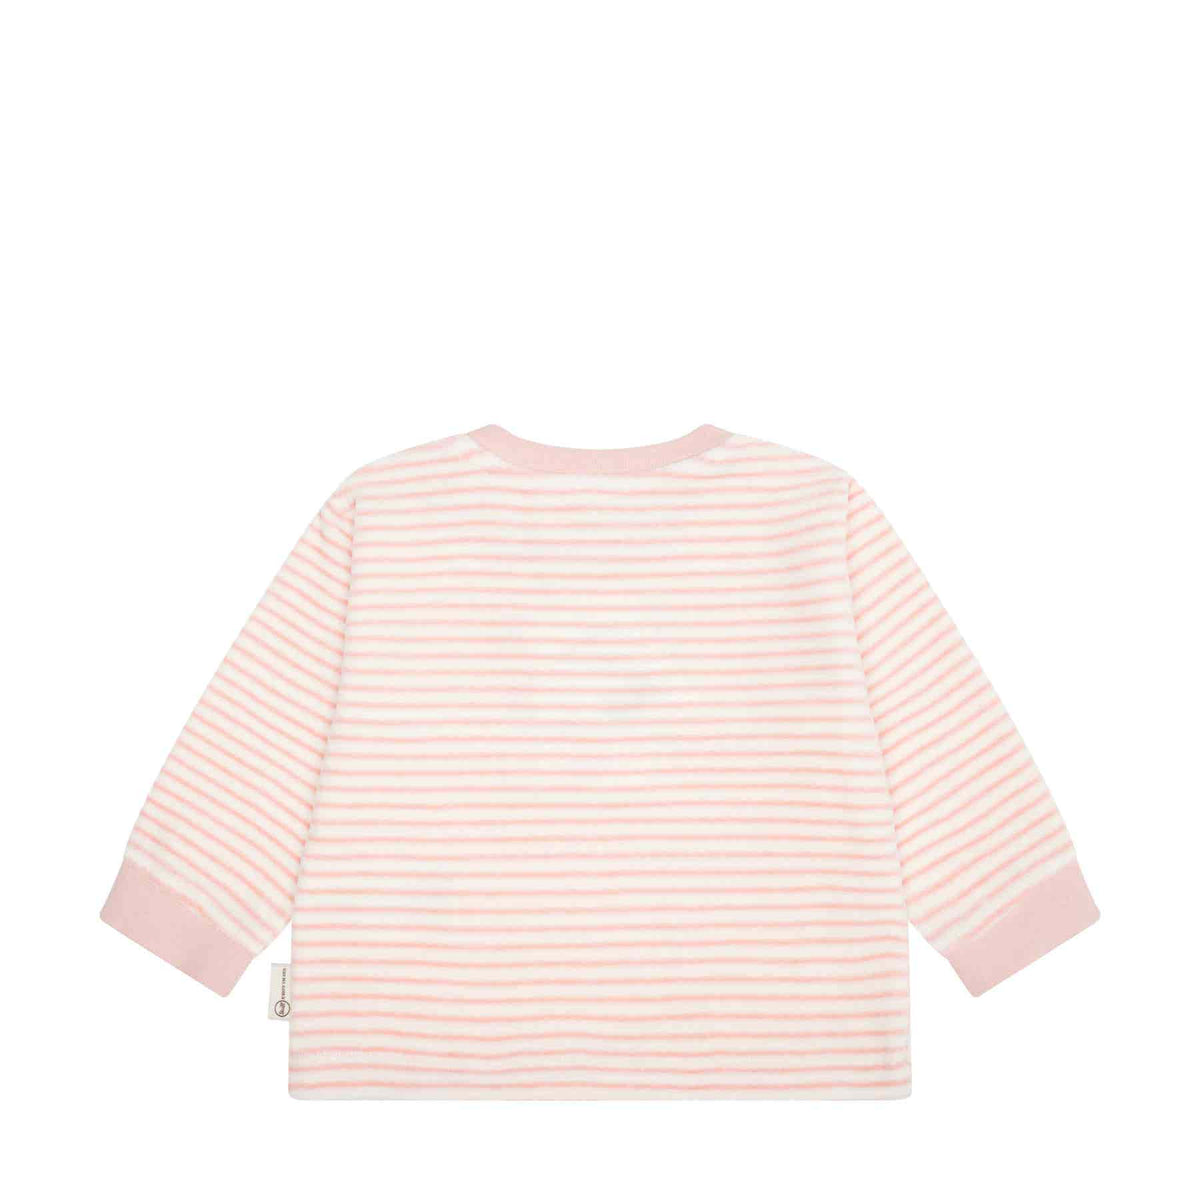 Baby Mädchen Sweatshirt Pullover L000030015 3015 Rosa